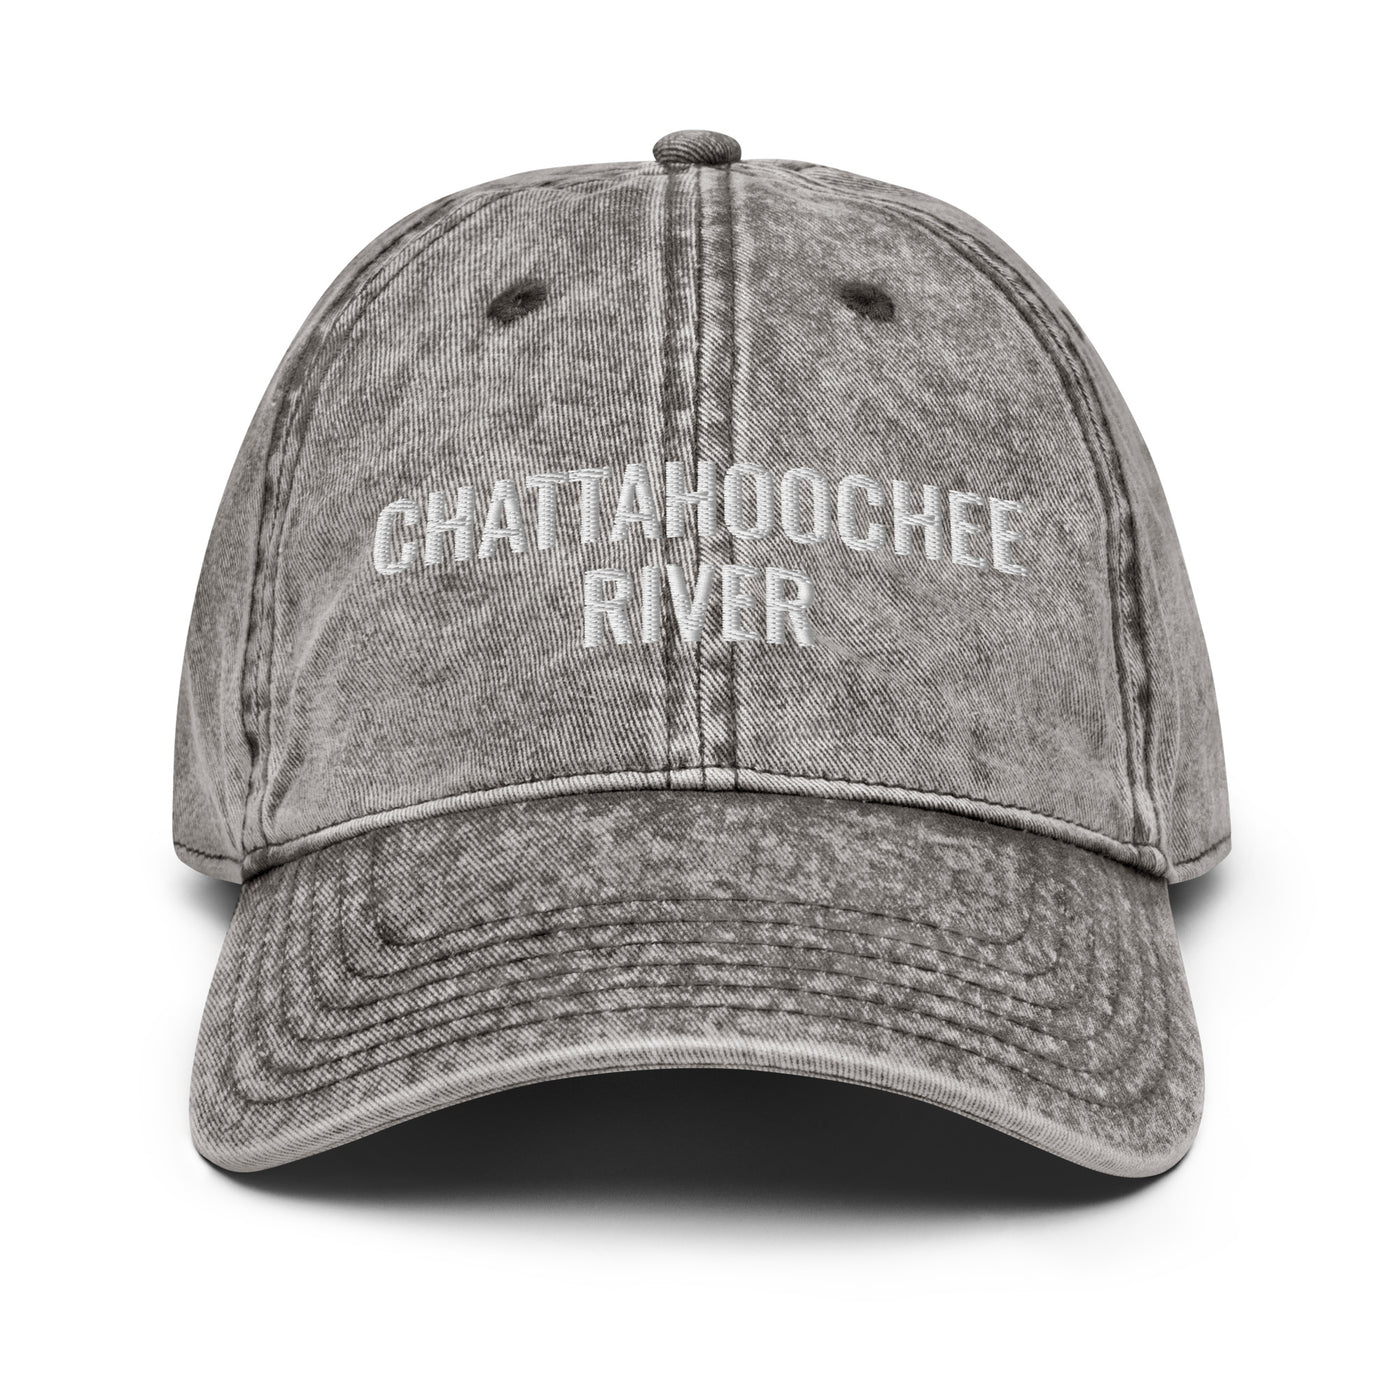 Chattahoochee River Hat Hats Ezra's Clothing Charcoal Grey  